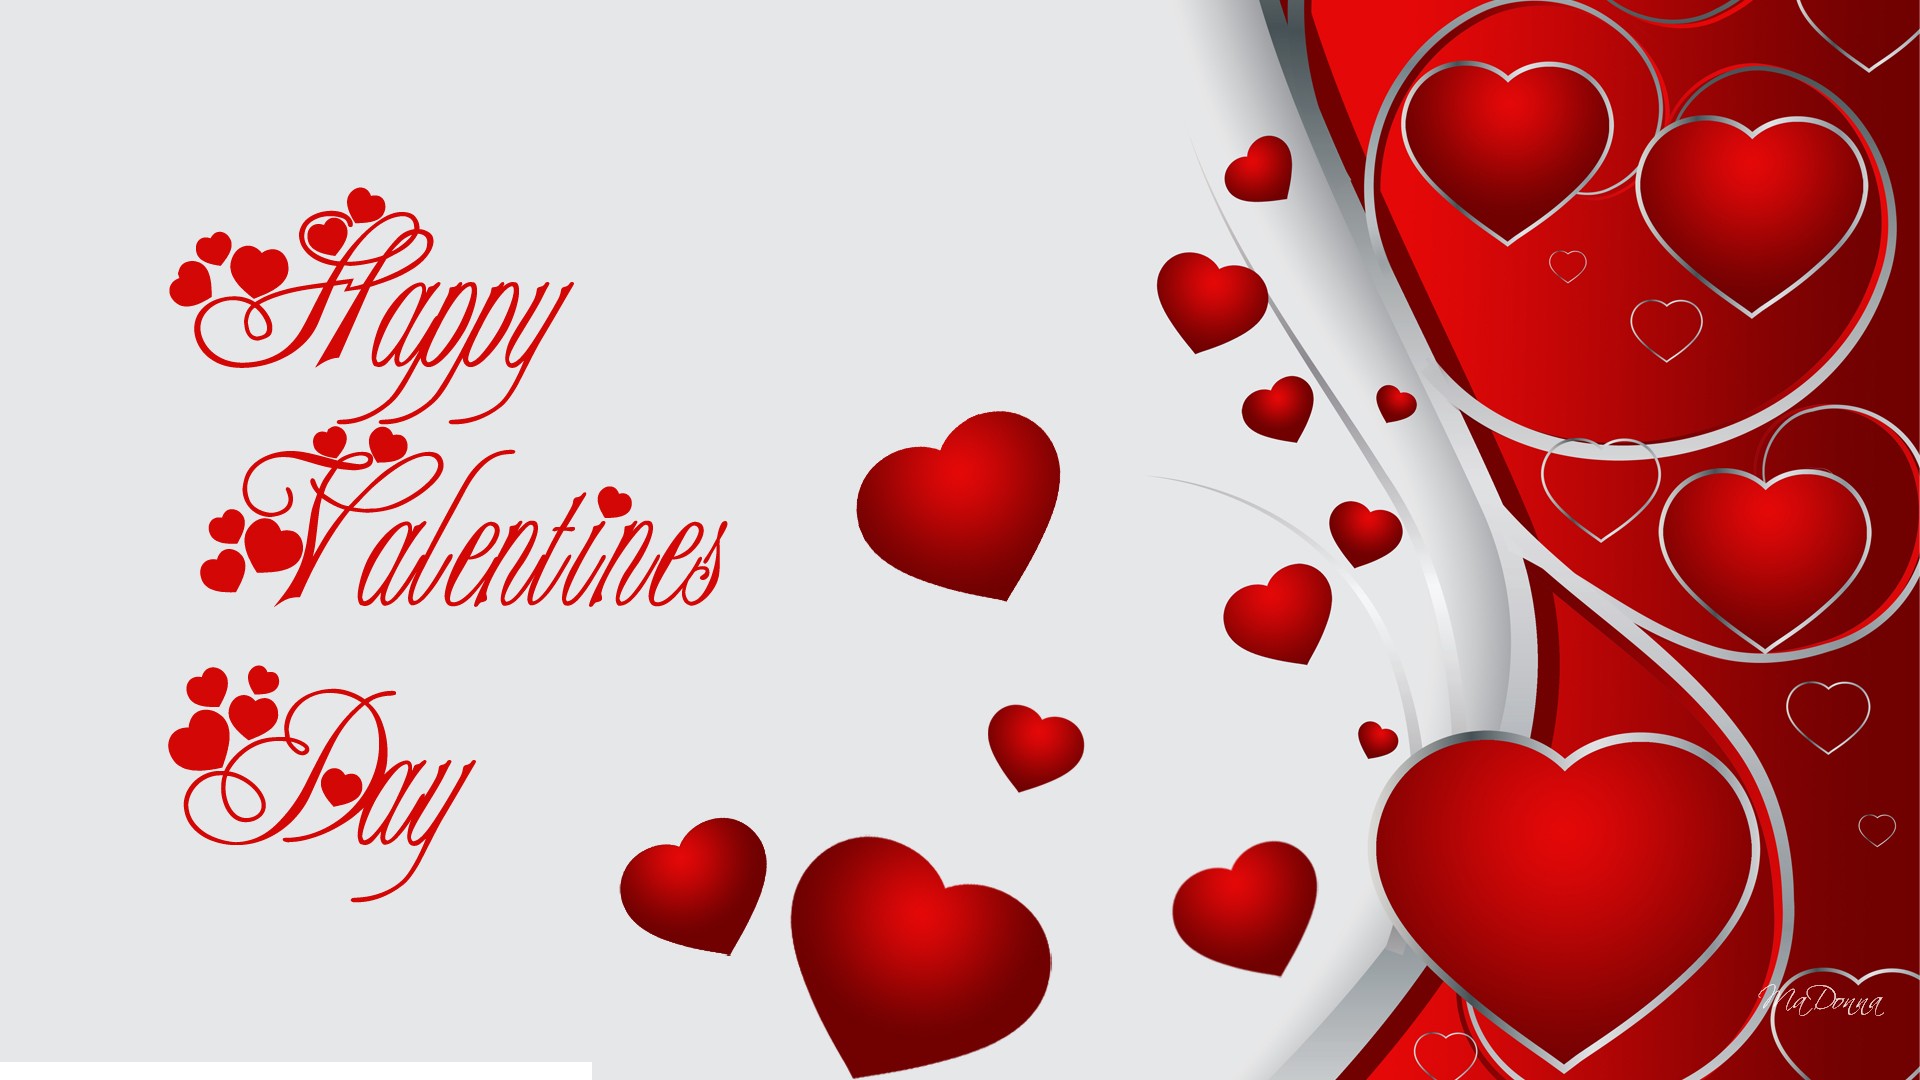 Love Heart Happy Valentines Day Wallpaper